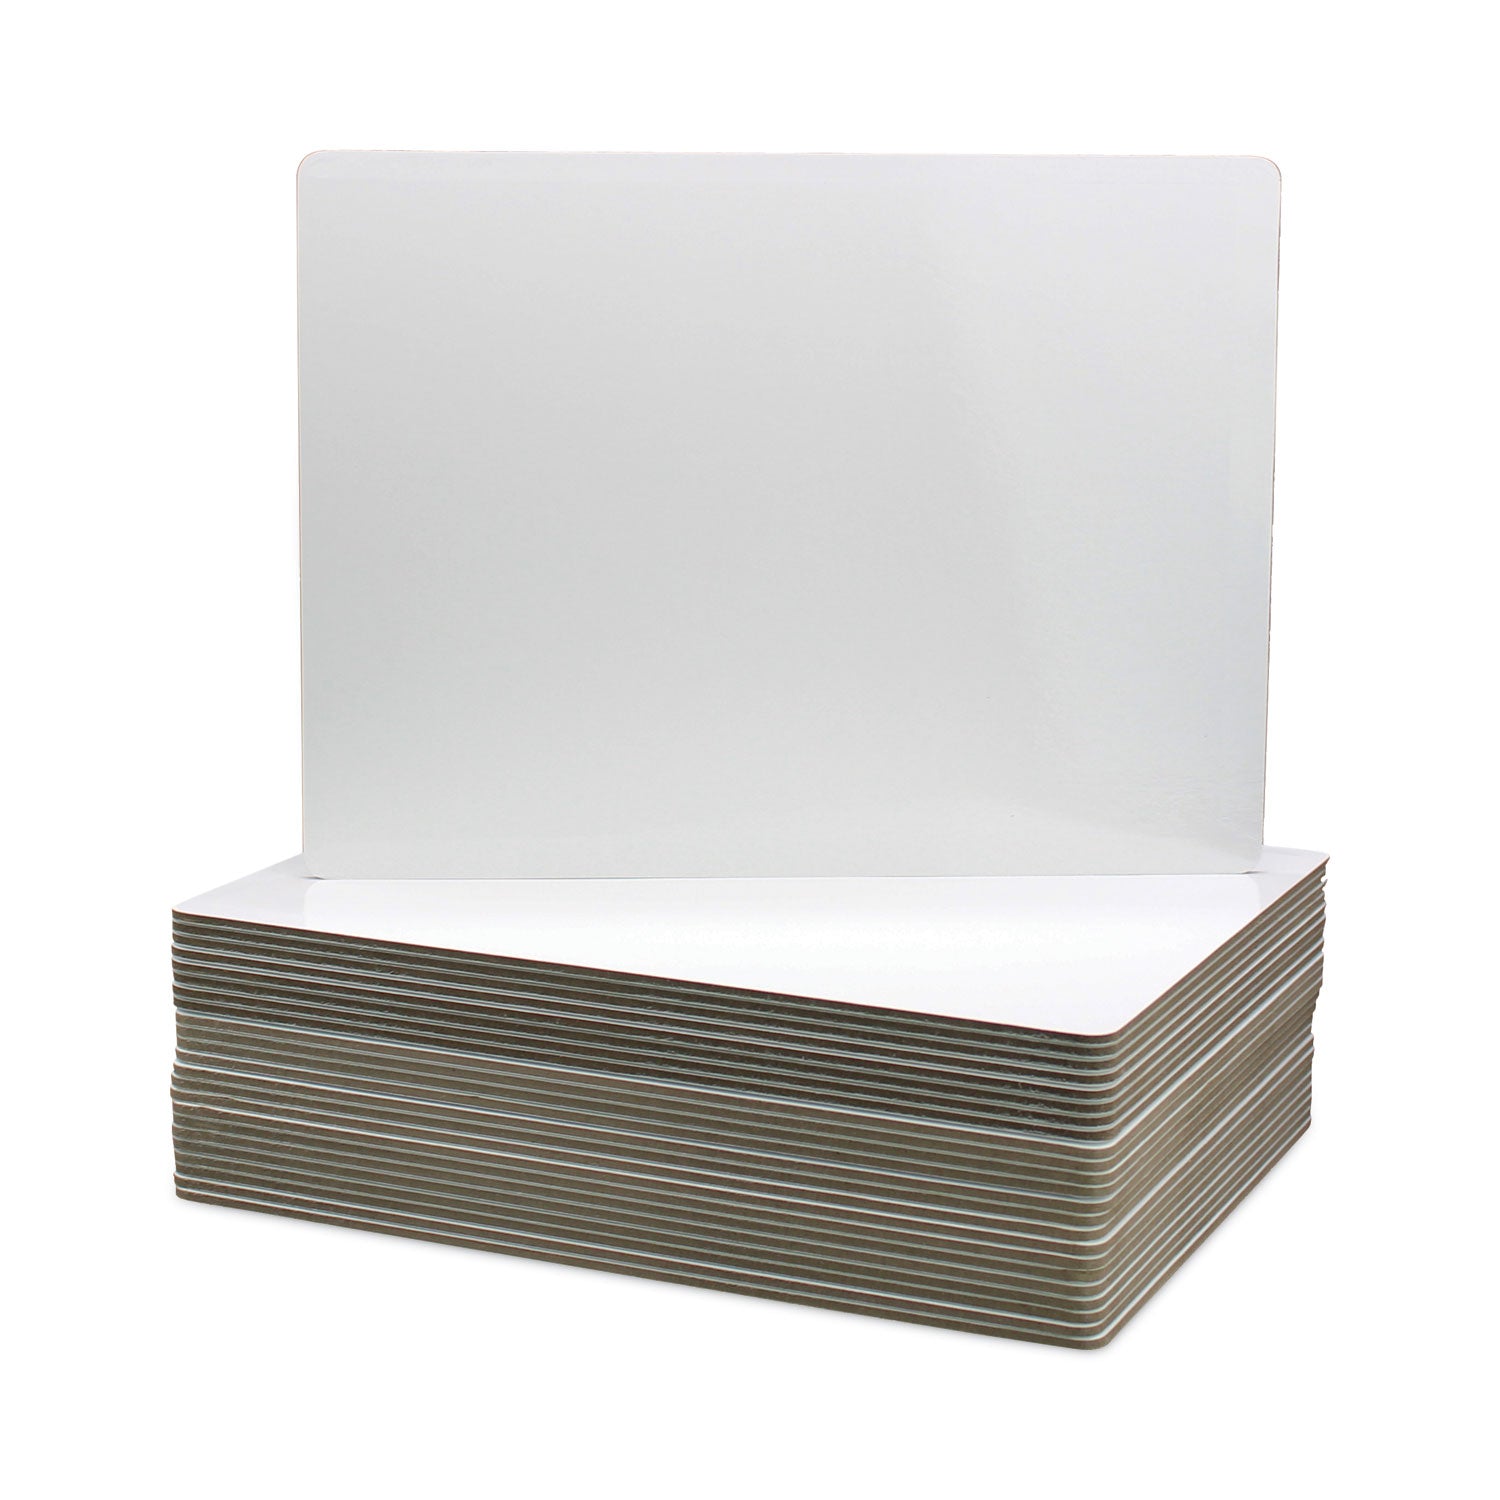 magnetic-dry-erase-board-12-x-9-white-surface_flp10025 - 2